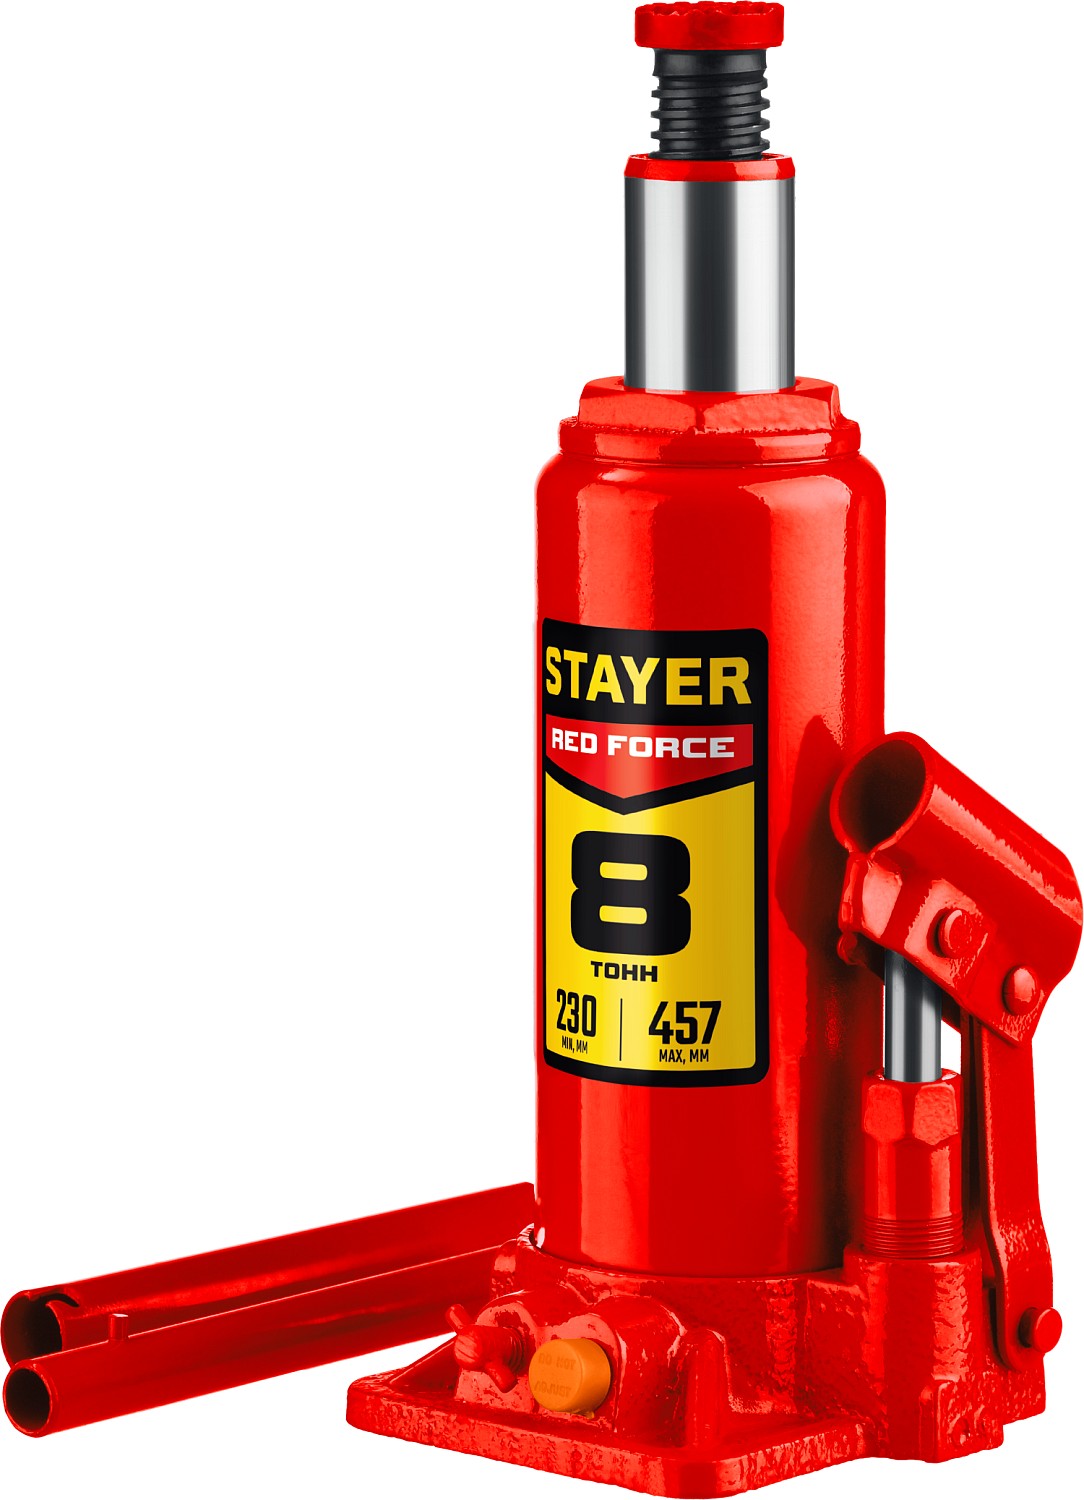 STAYER RED FORCE, 8 т, 200 - 385 мм, бутылочный гидравлический домкрат, Professional (43160-8)